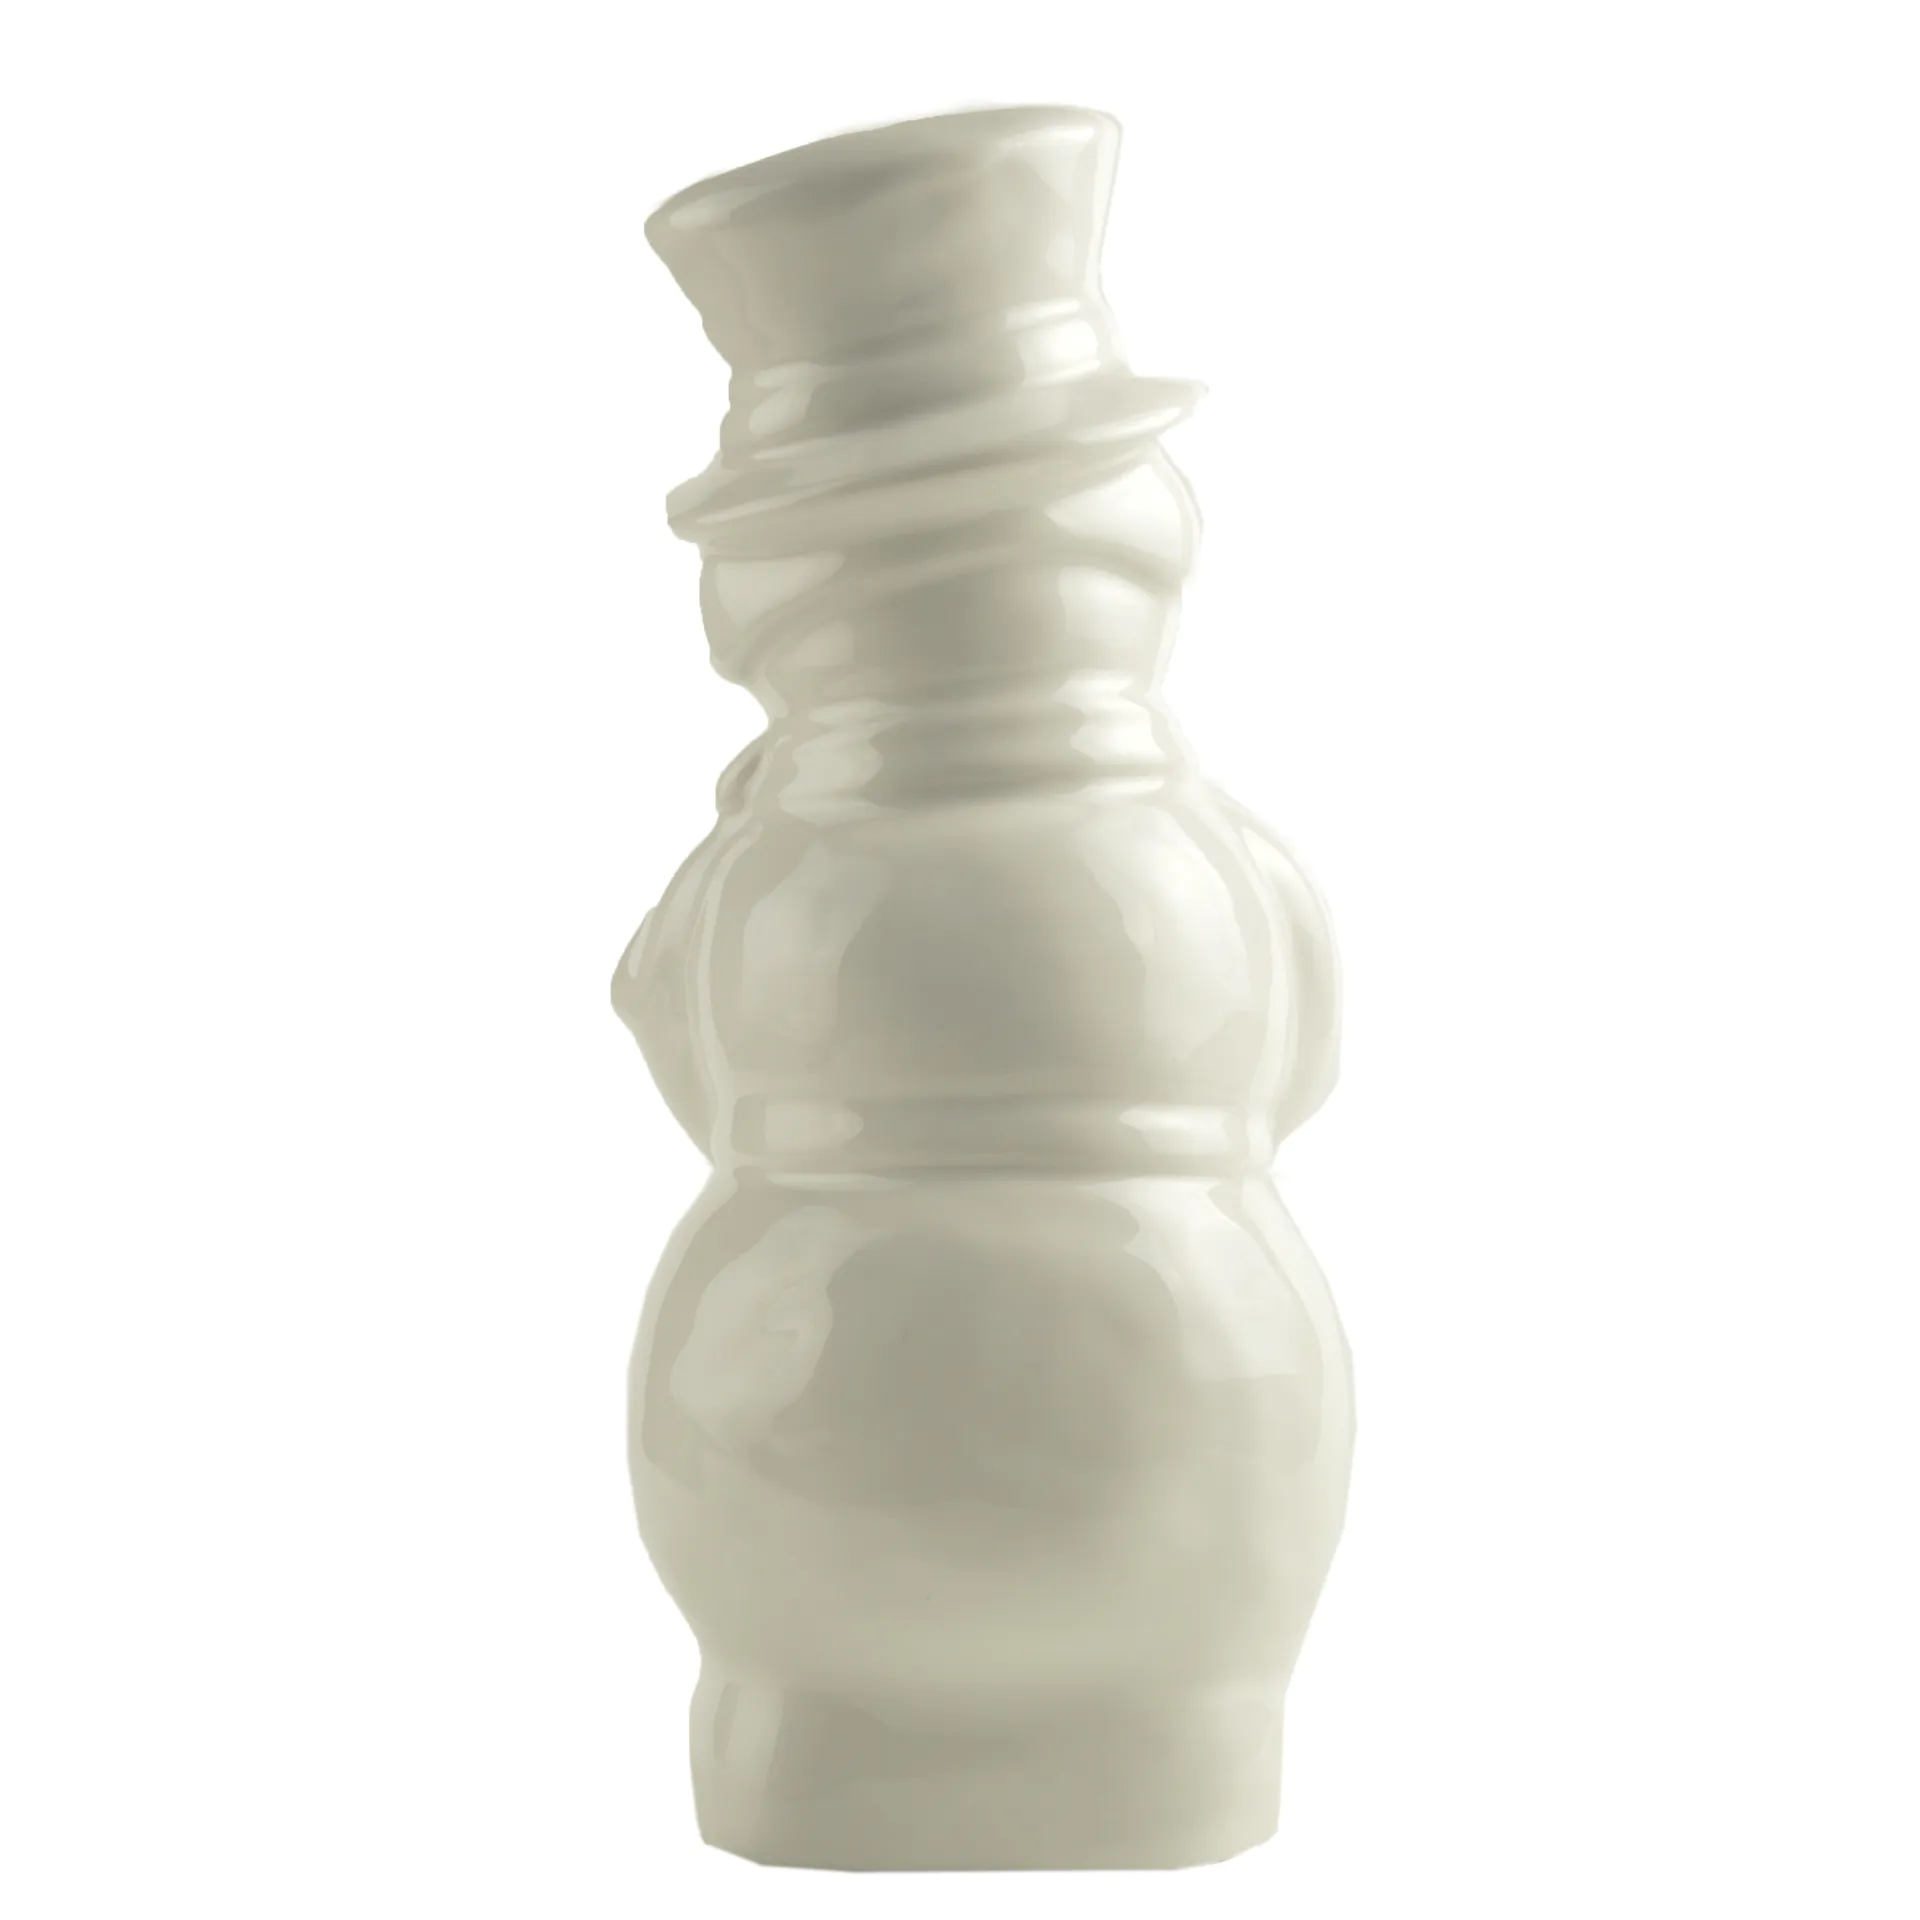 Wholesale New custom design personalized White Ceramic Snowman Decor Christmas home decoration